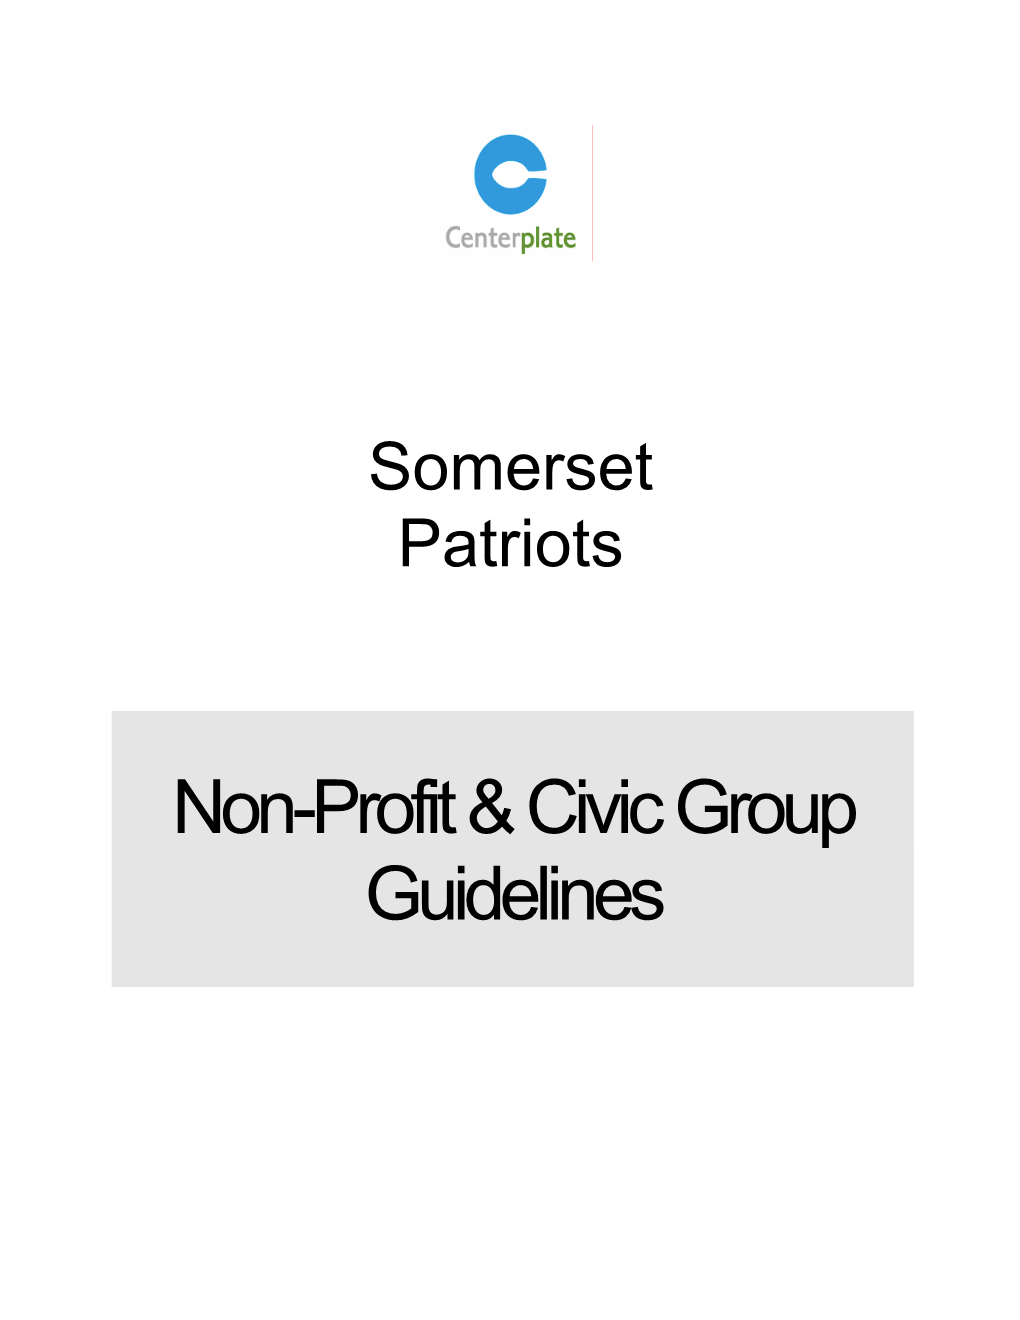 Non-Profit & Civic Group Guidelines